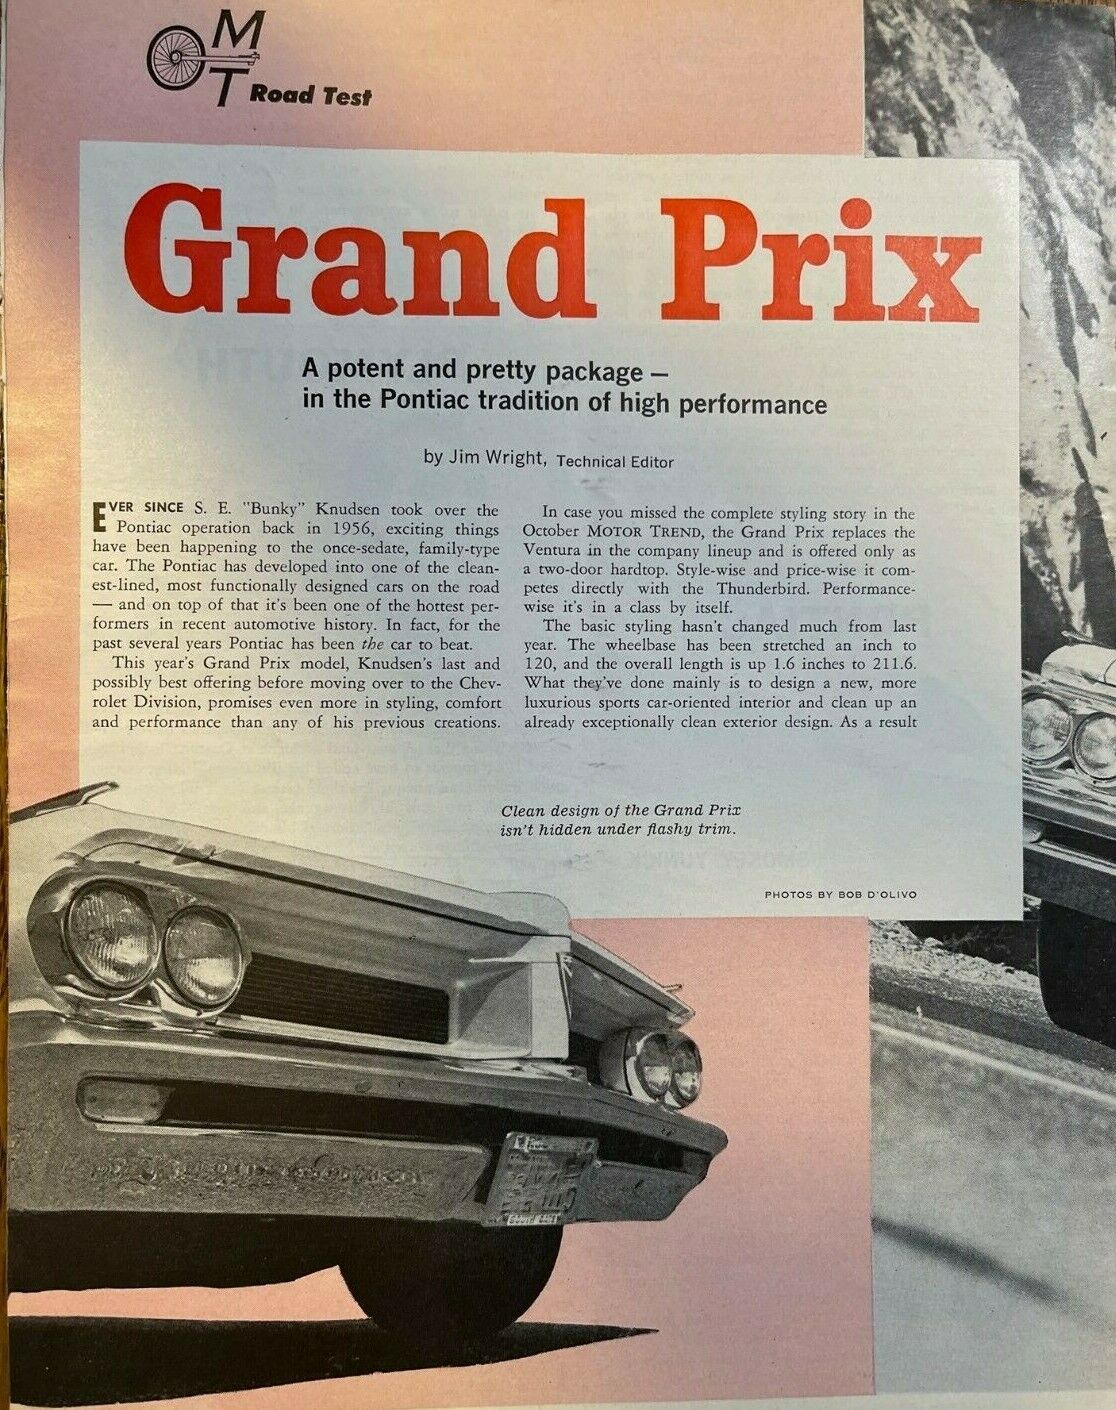 Road Test 1962 Pontiac Grand Prix illustrated